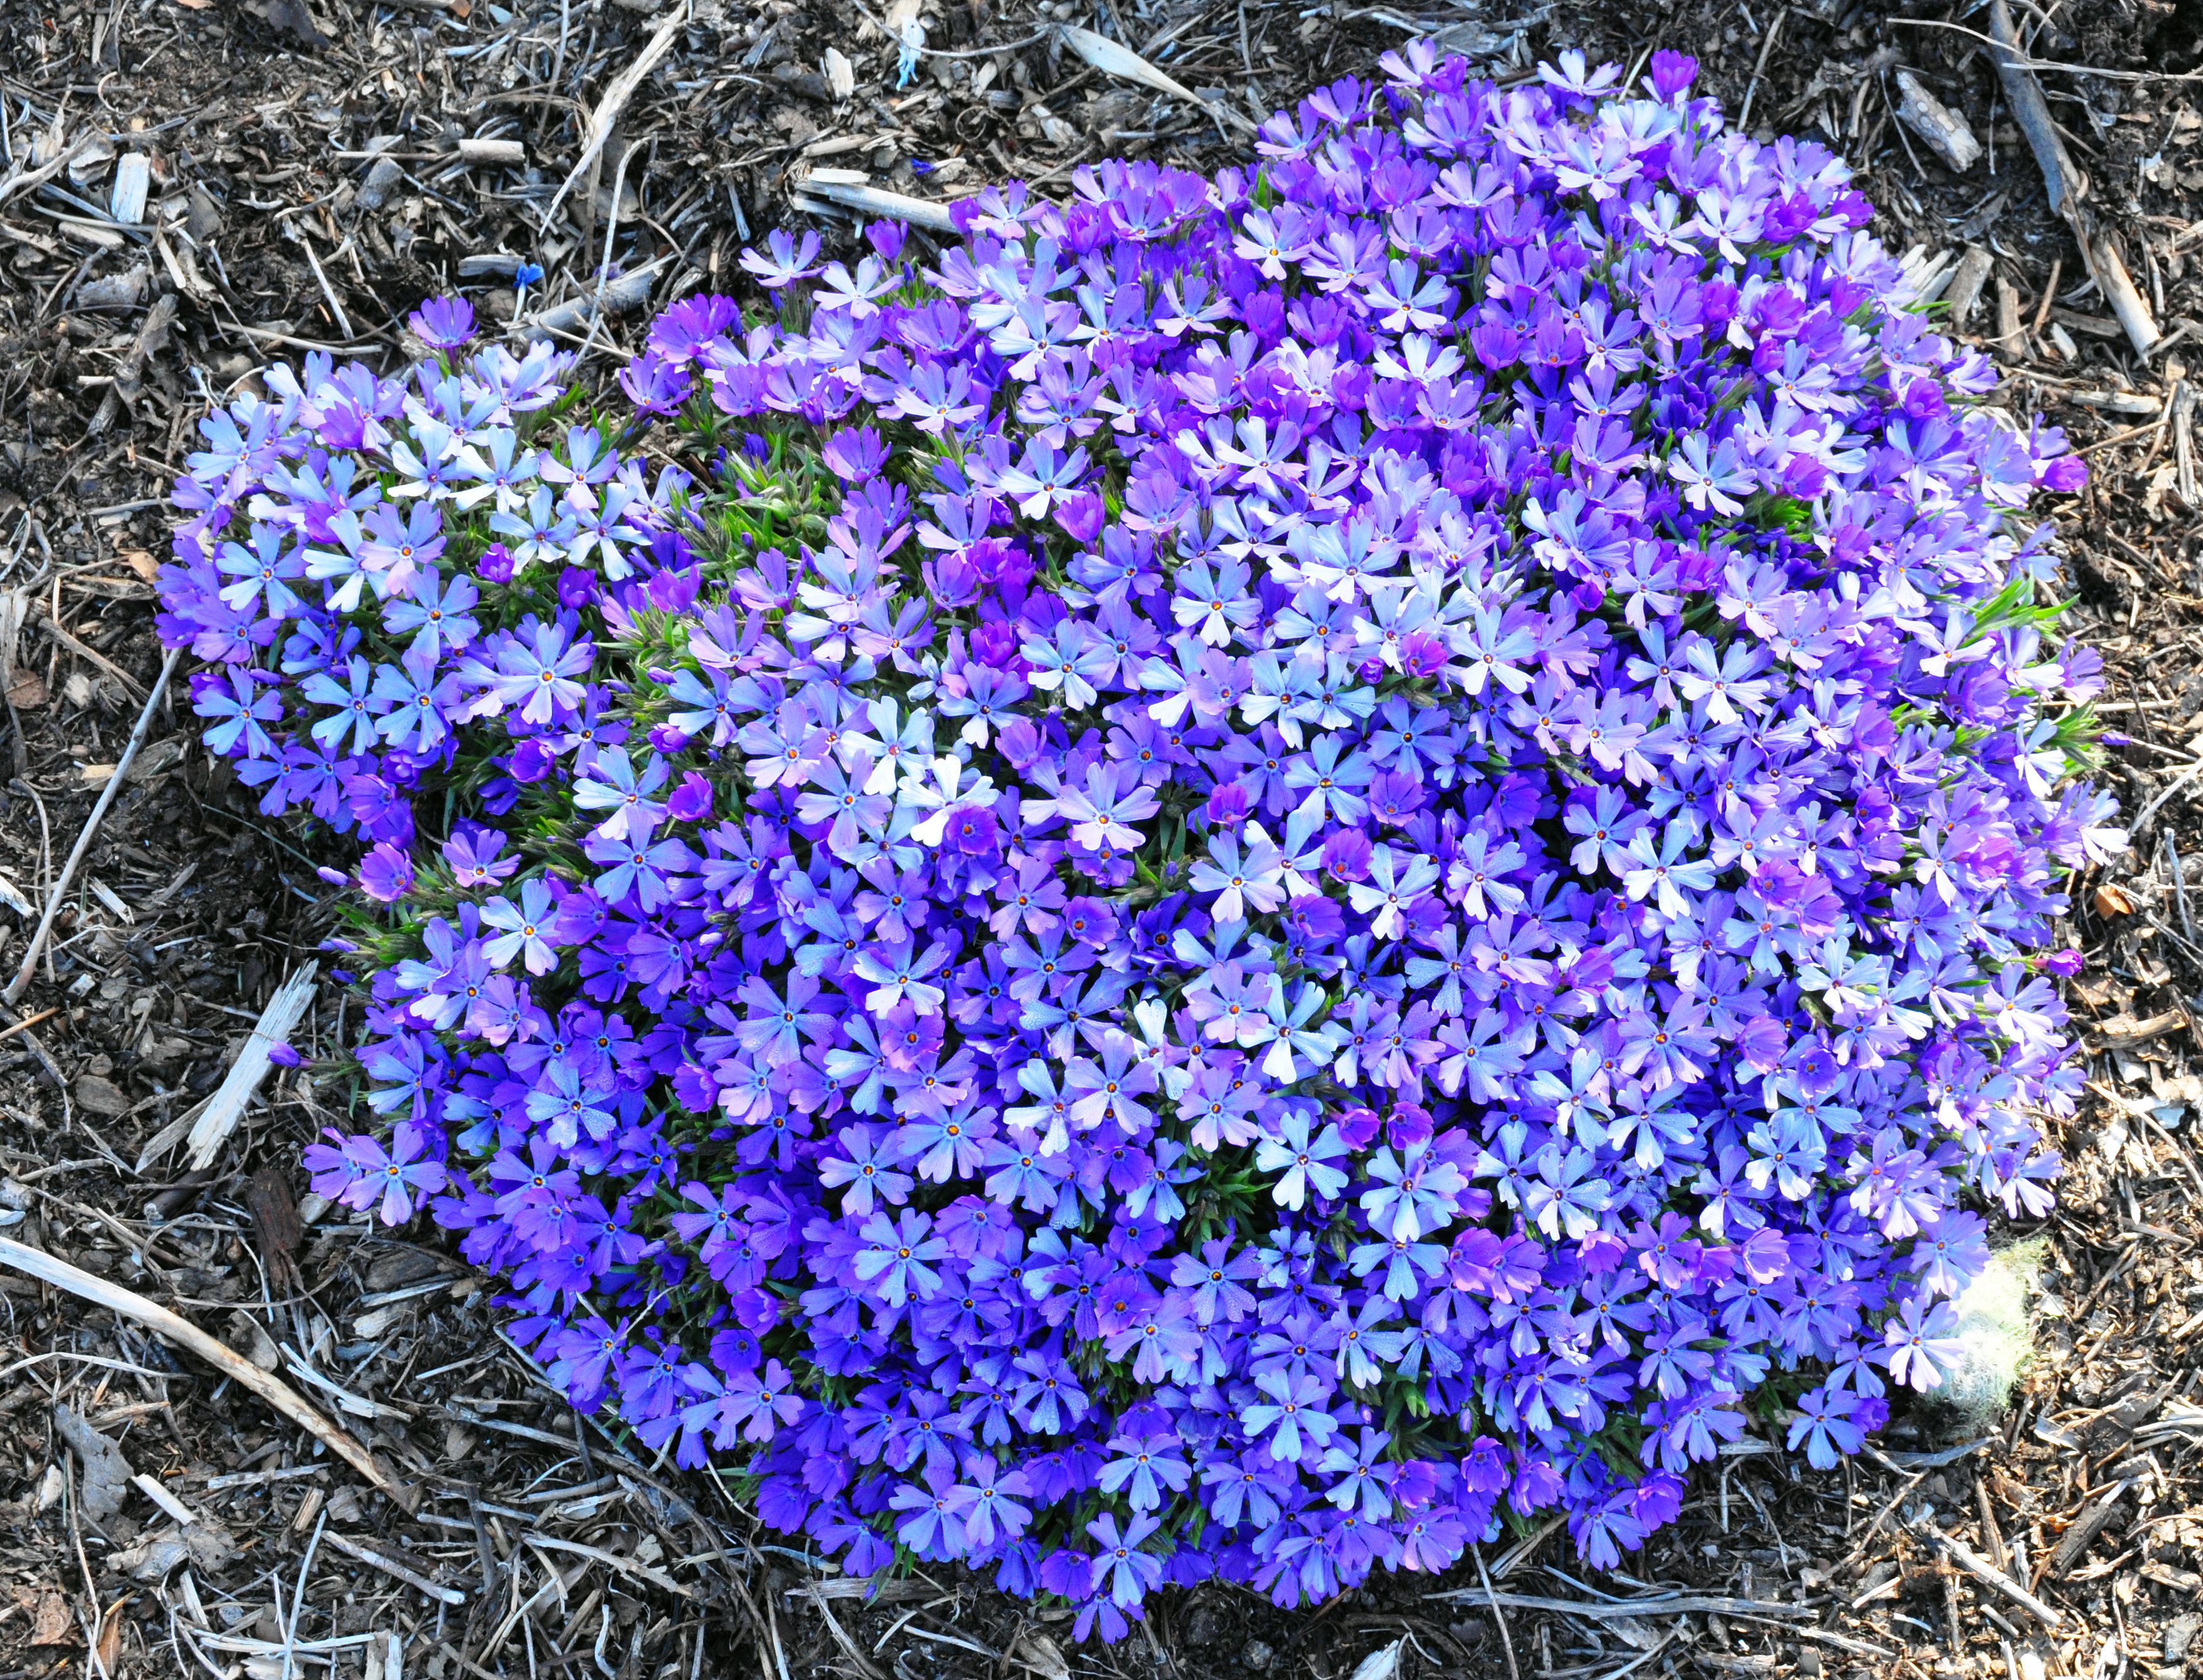 images/plants/phlox/phl-violet-pinwheels/phl-violet-pinwheels-0001.jpg